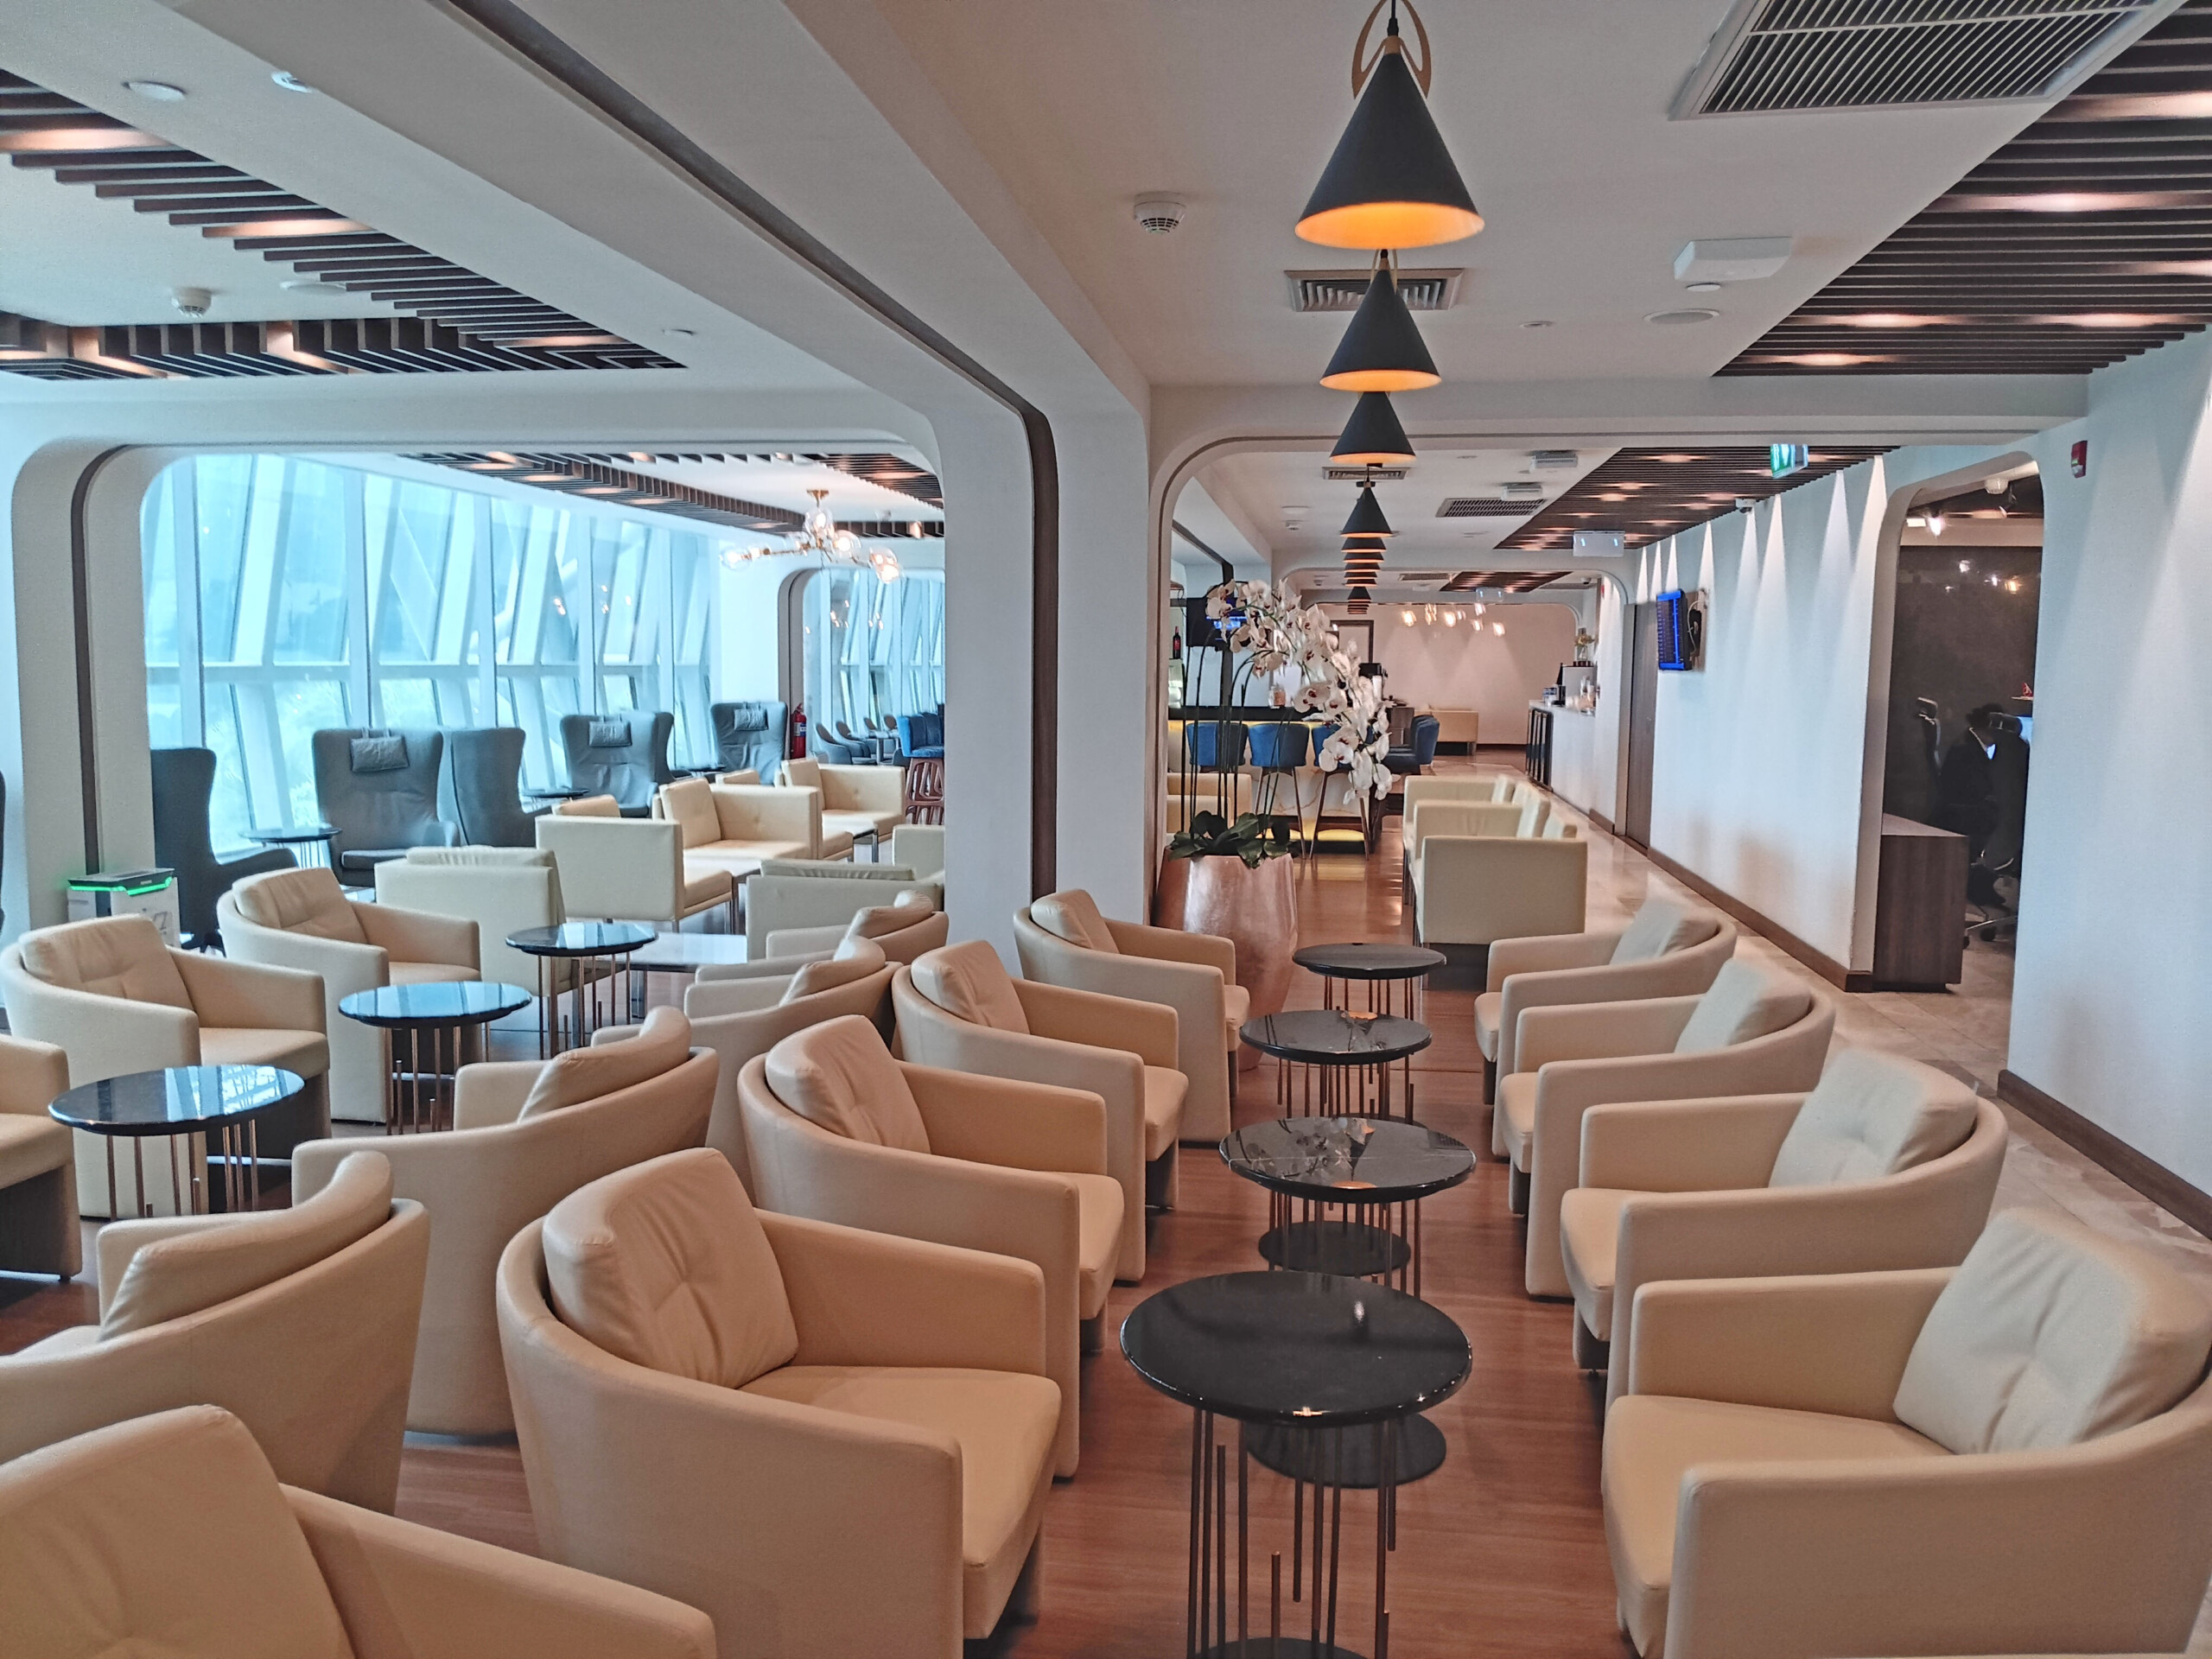 Turkish Airlines Lounge BKK main seating area